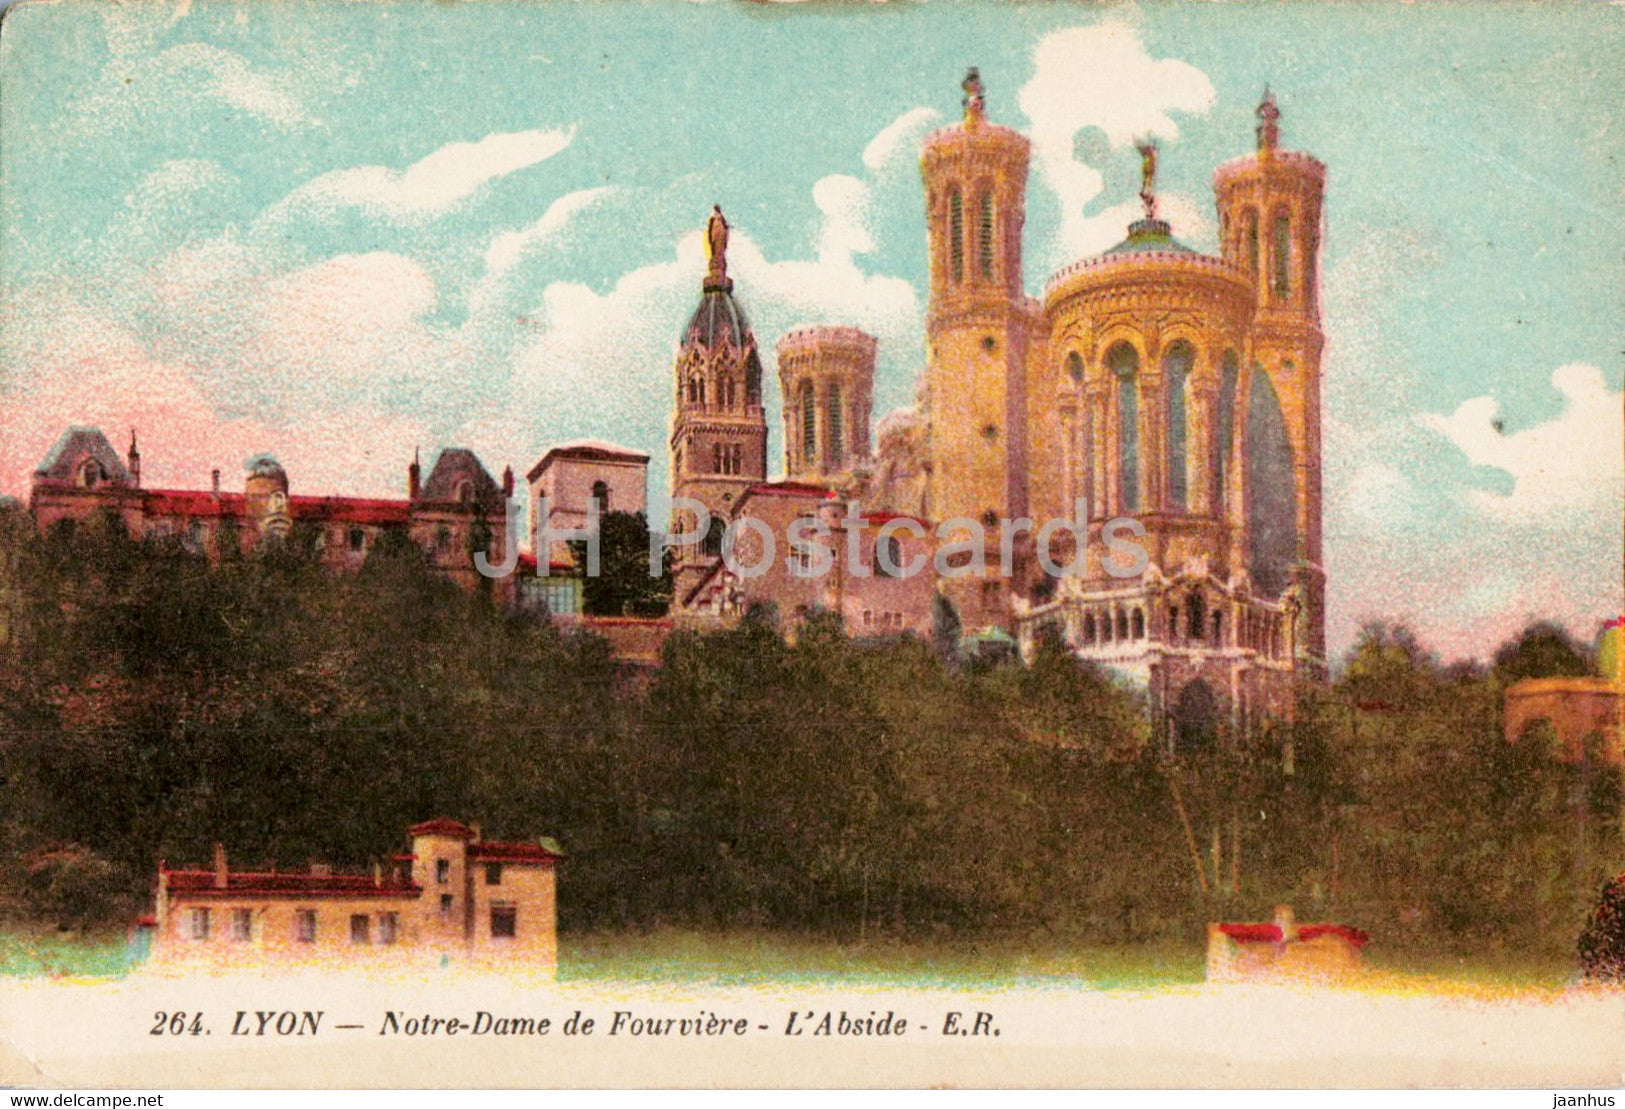 Lyon - Notre Dame de Fourviere - L'Abside - cathedral - 264 - old postcard - France - unused - JH Postcards